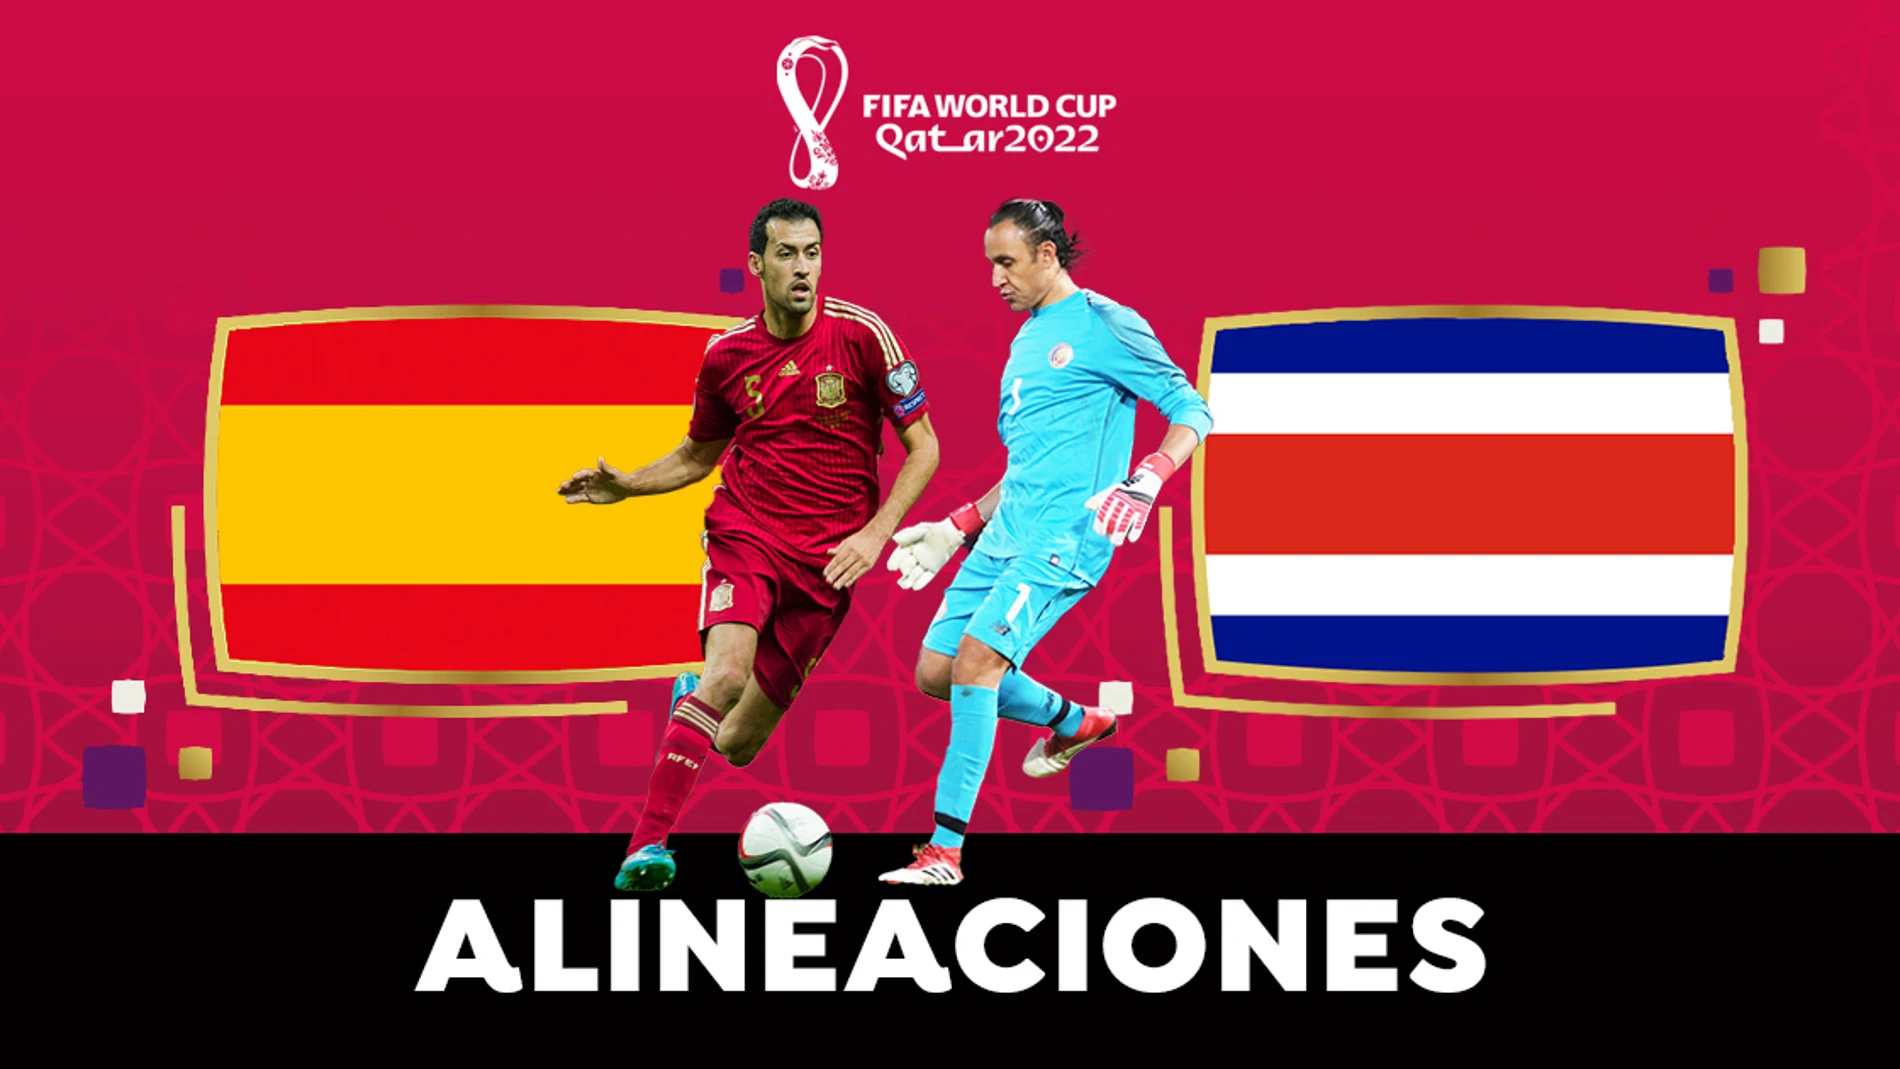 OFICIAL de España contra Costa Rica hoy en el del Grupo E del Mundial de Qatar 2022